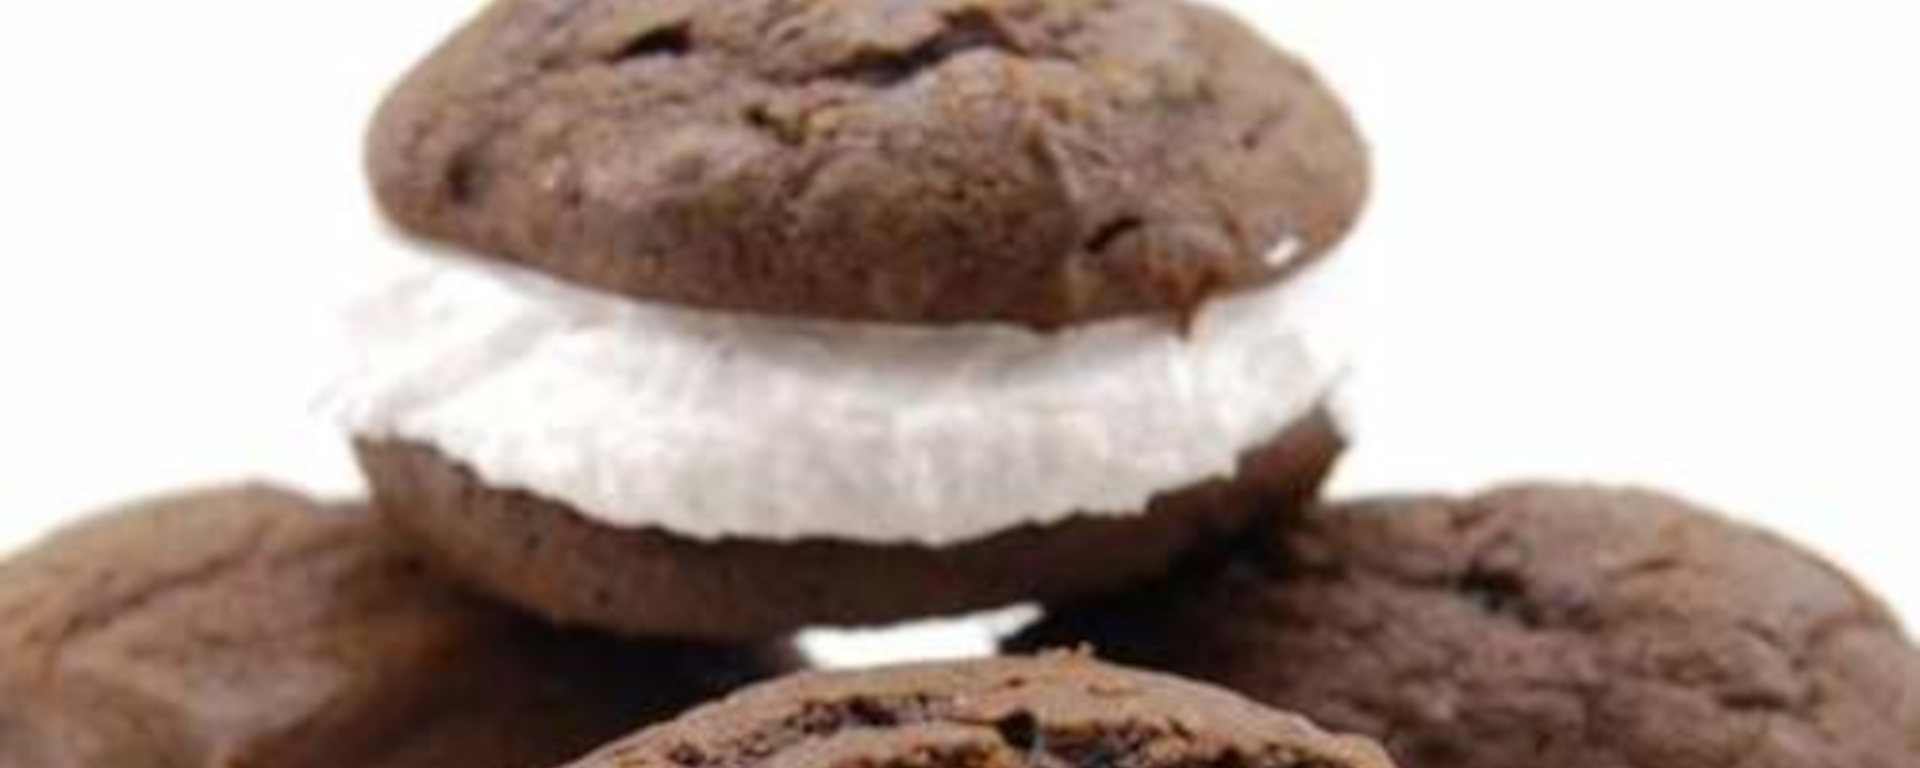 LuvMyRecipe.com - Chocolate Best Marshmallow Cookies Featured